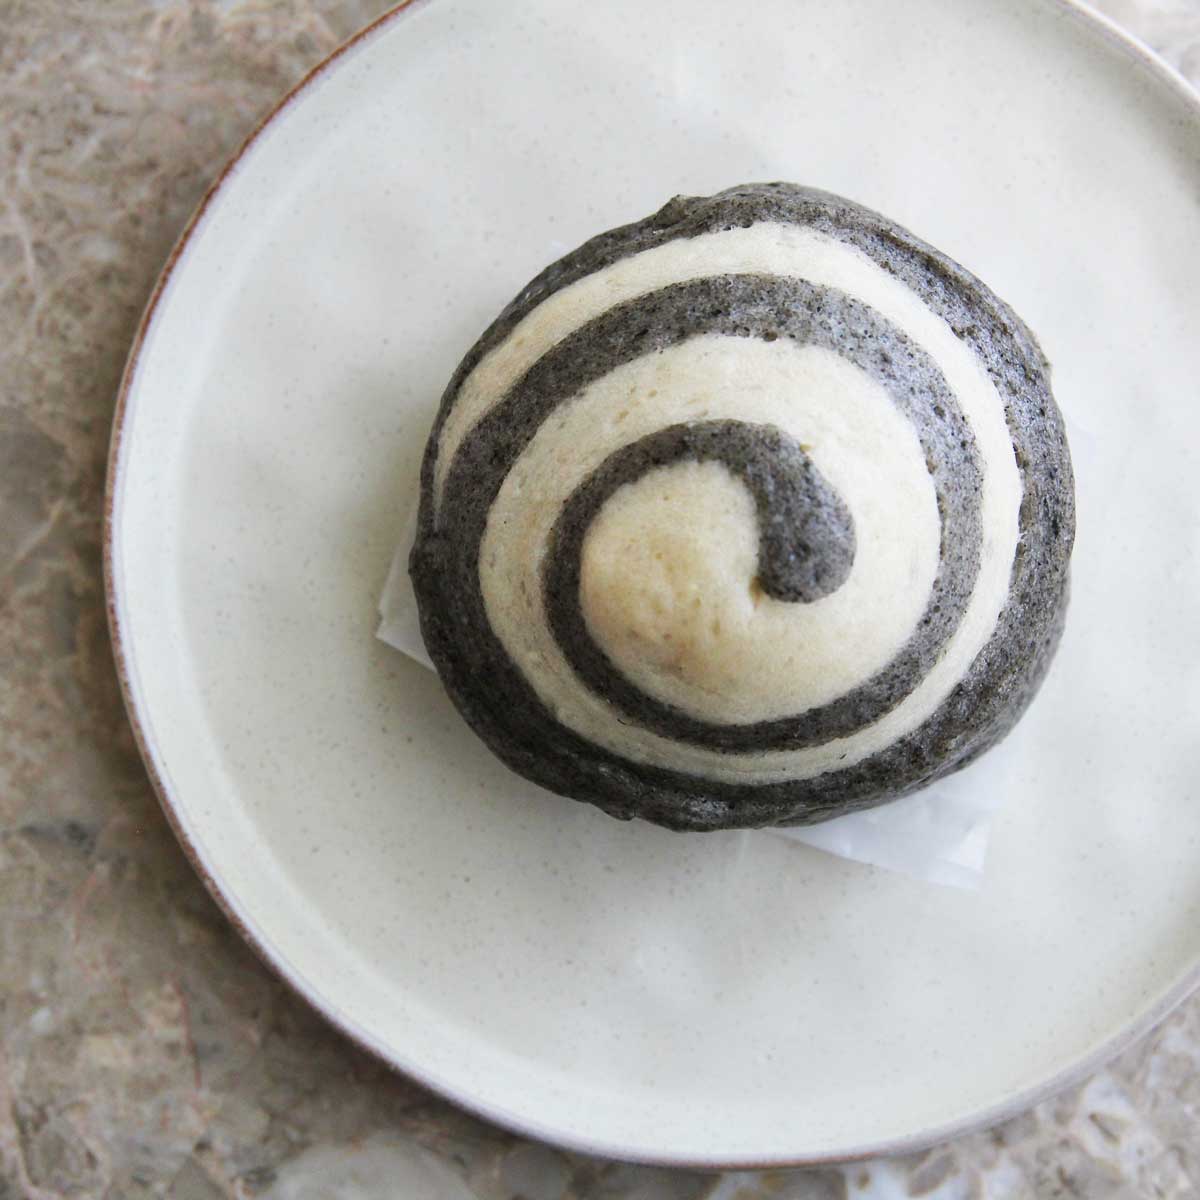 Homemade Black Sesame & Almond Milk Spiral Mantou (Vegan Steamed Buns Recipe) - Applesauce Cinnamon Rolls